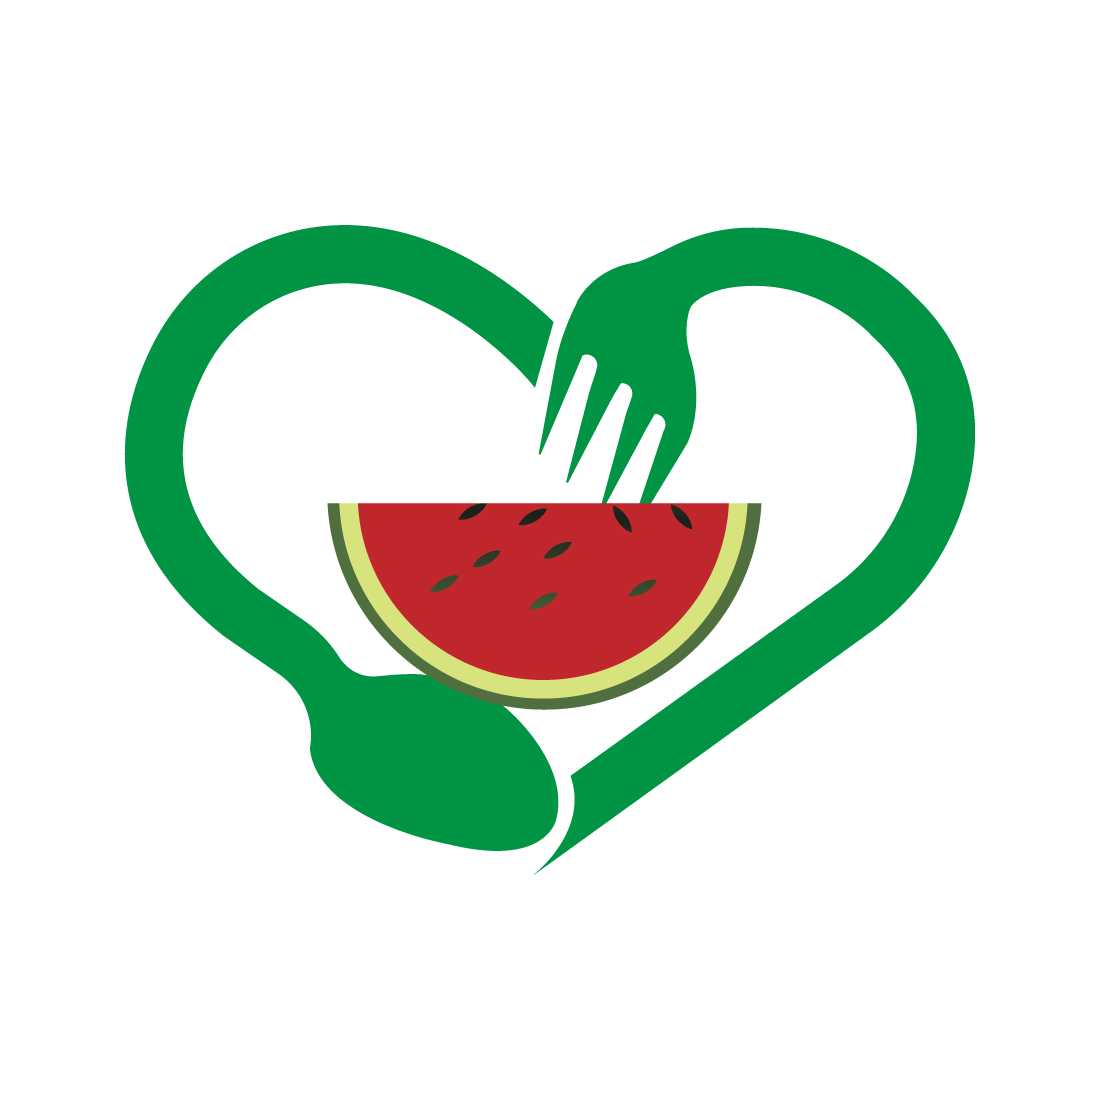 Premium vector Watermelon logo design vector images Palestine food logo design vector illustration preview image.